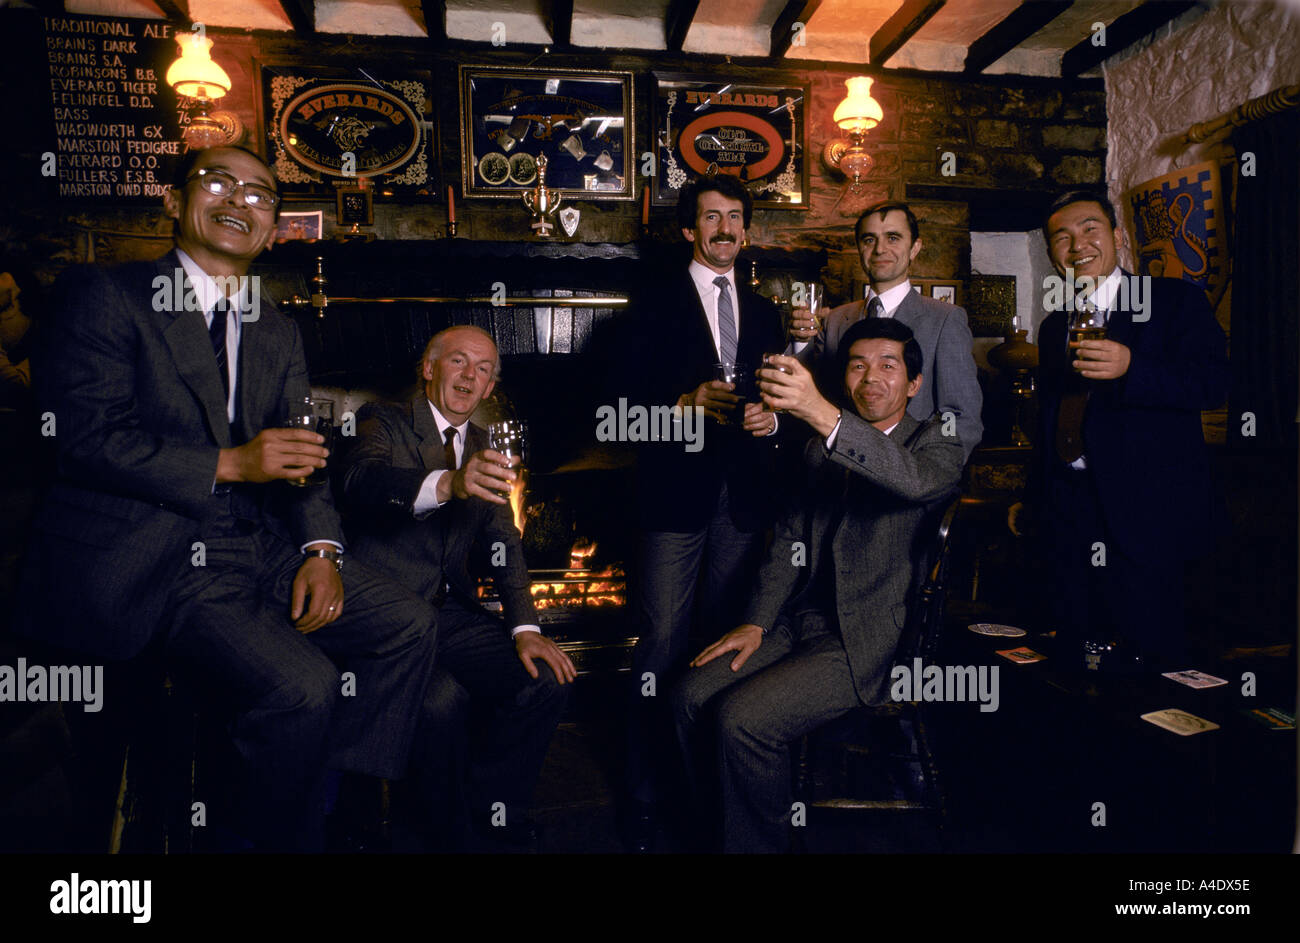 Men drinking raising glasses inside a pub in London, UK Stock Photo